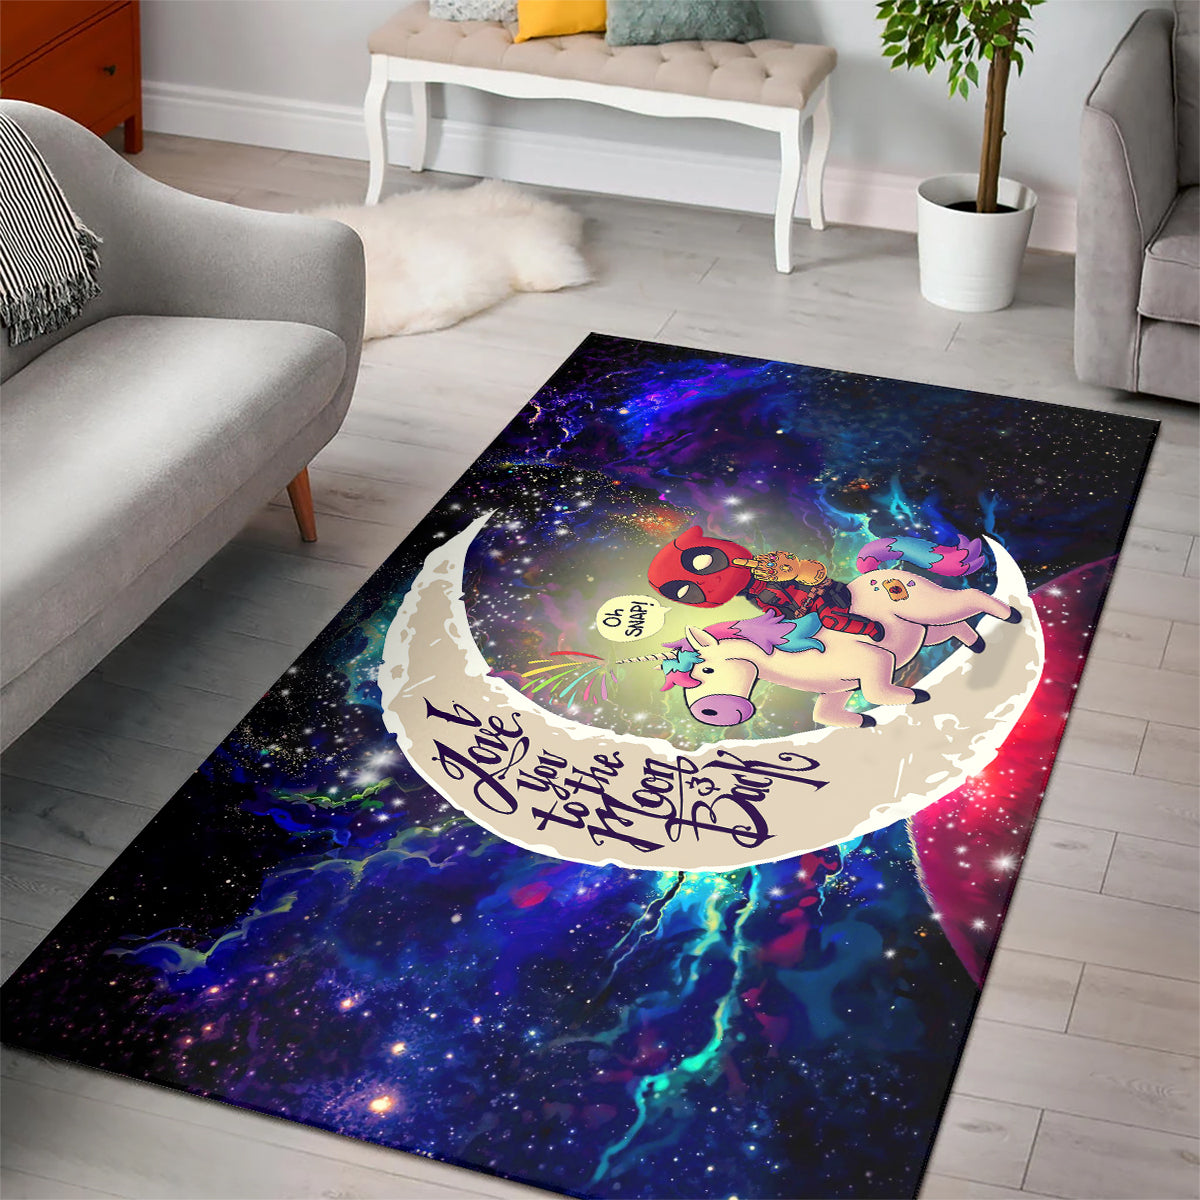 Deadpool Unicorn Love You To The Moon Galaxy Carpet Rug Home Room Decor